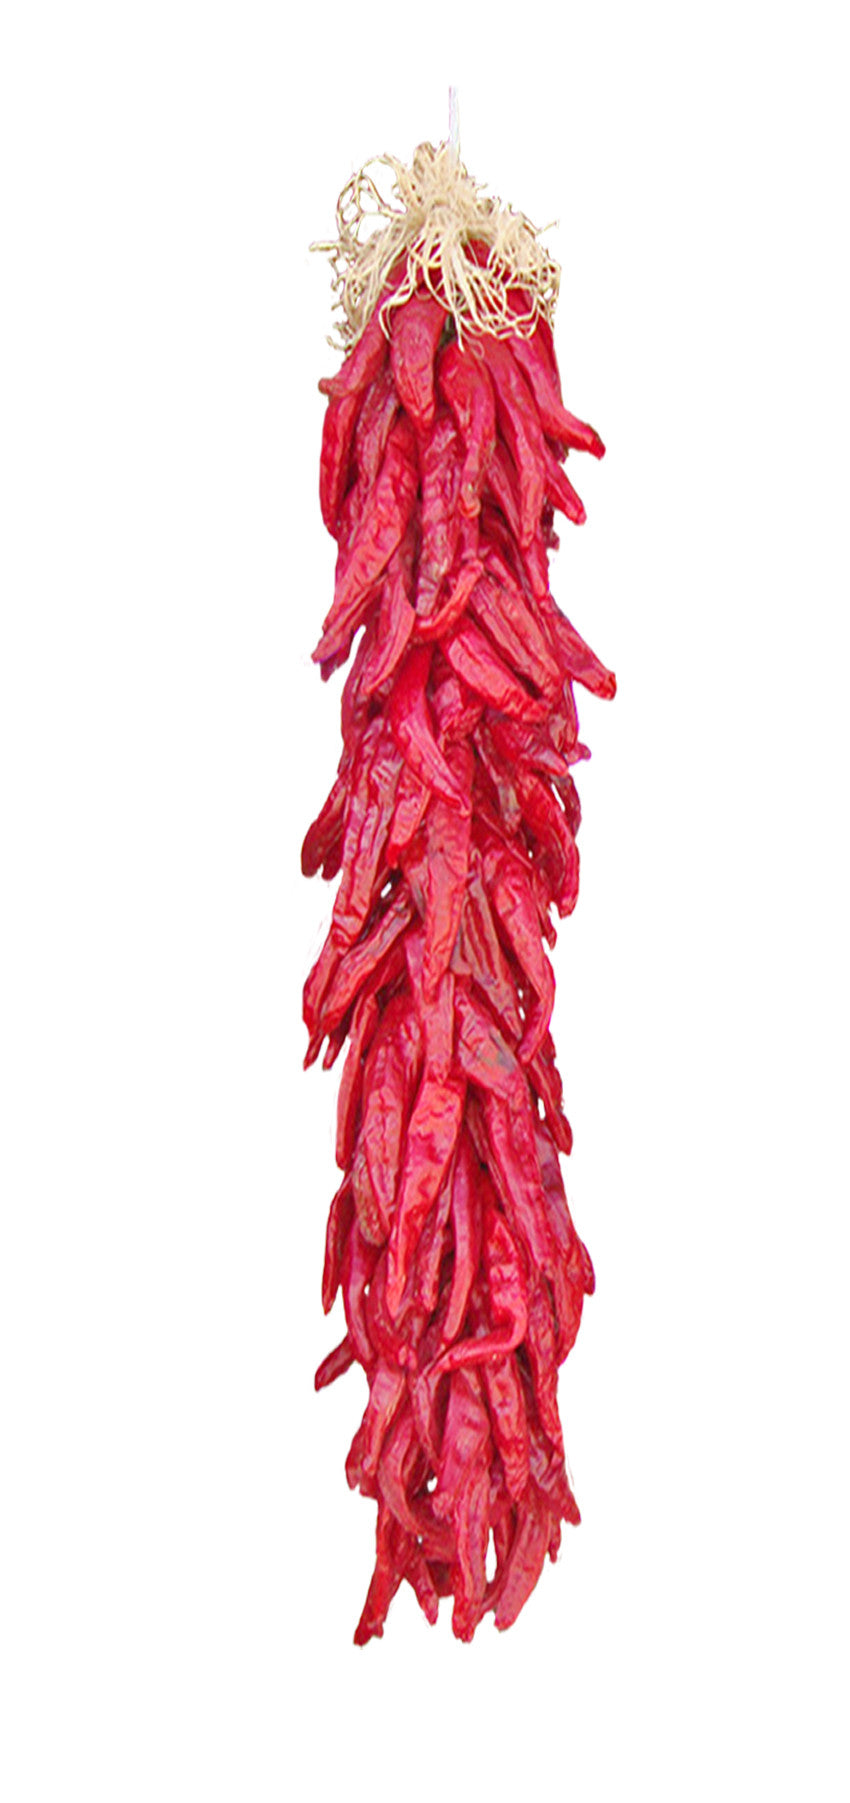 Hatch Red Hot - Sandia Hot - 1/2 oz. Seeds - BULK - Sandia Seed Company